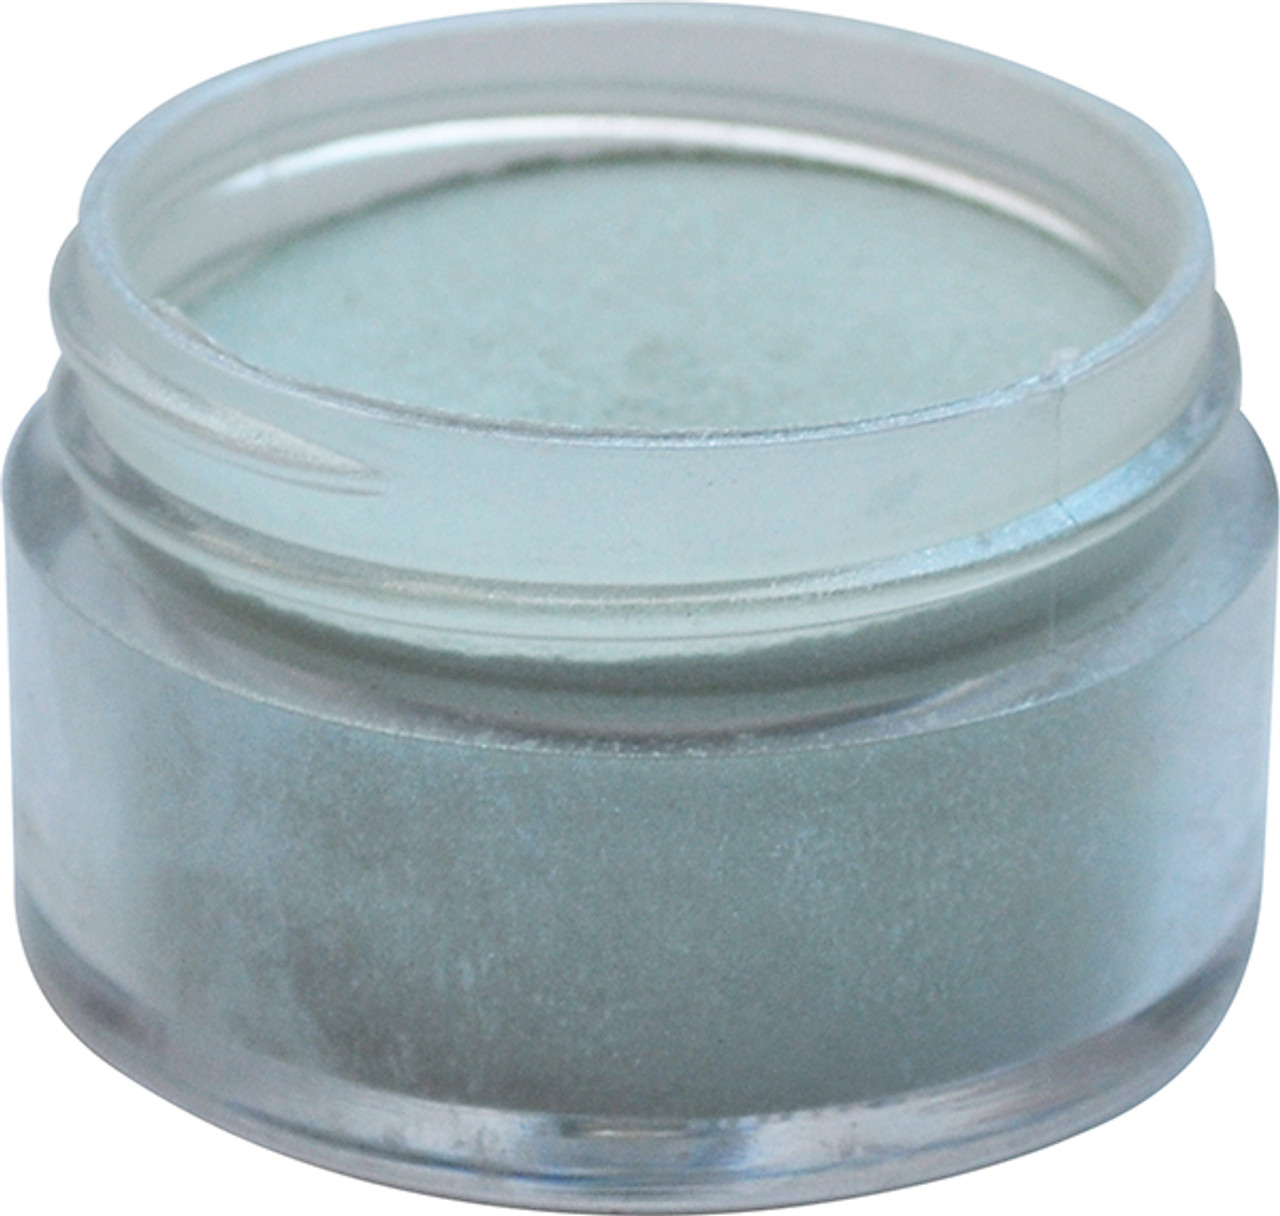 U2 PEARLESCENT Color Powder - Pixie Dust - 1/2 oz